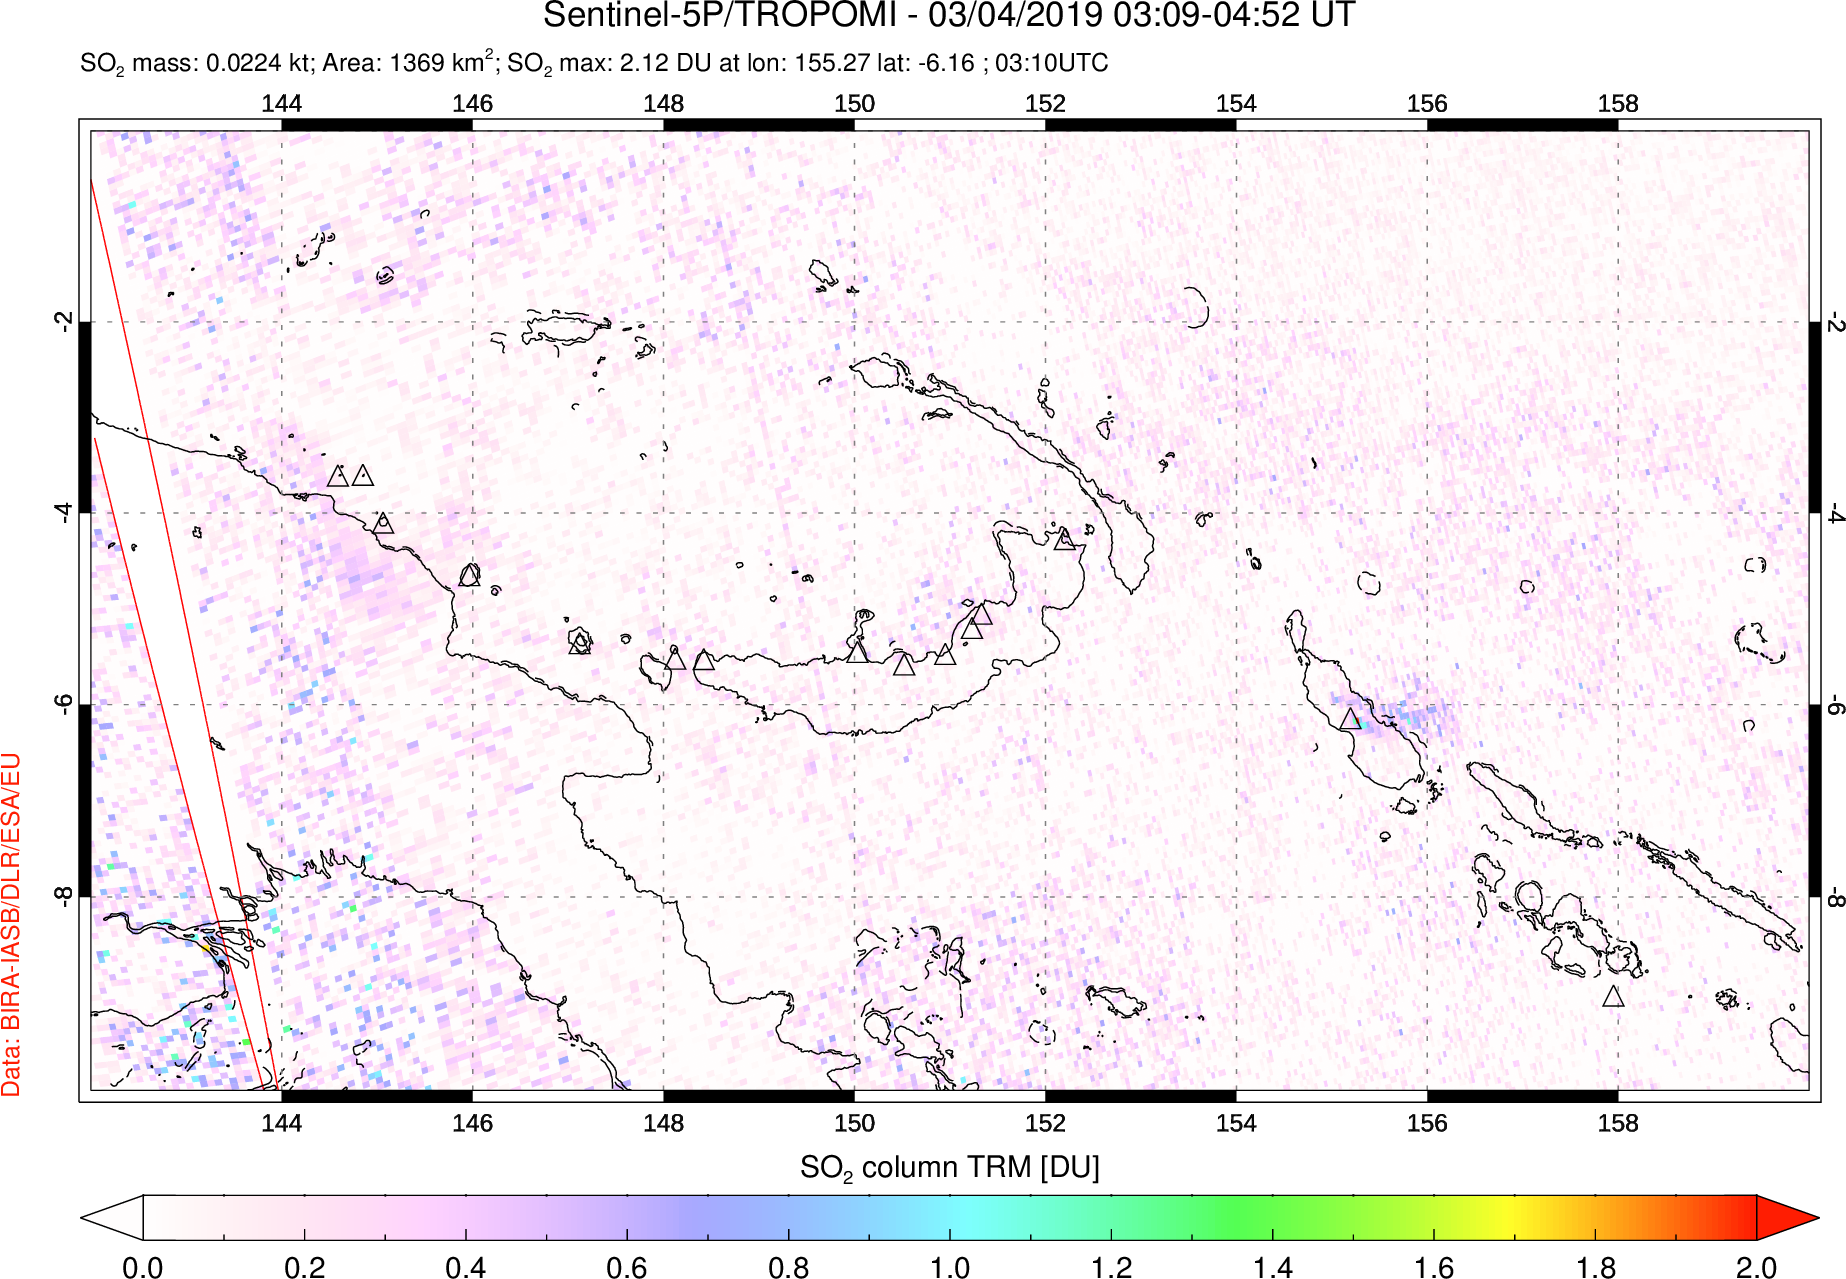 A sulfur dioxide image over Papua, New Guinea on Mar 04, 2019.